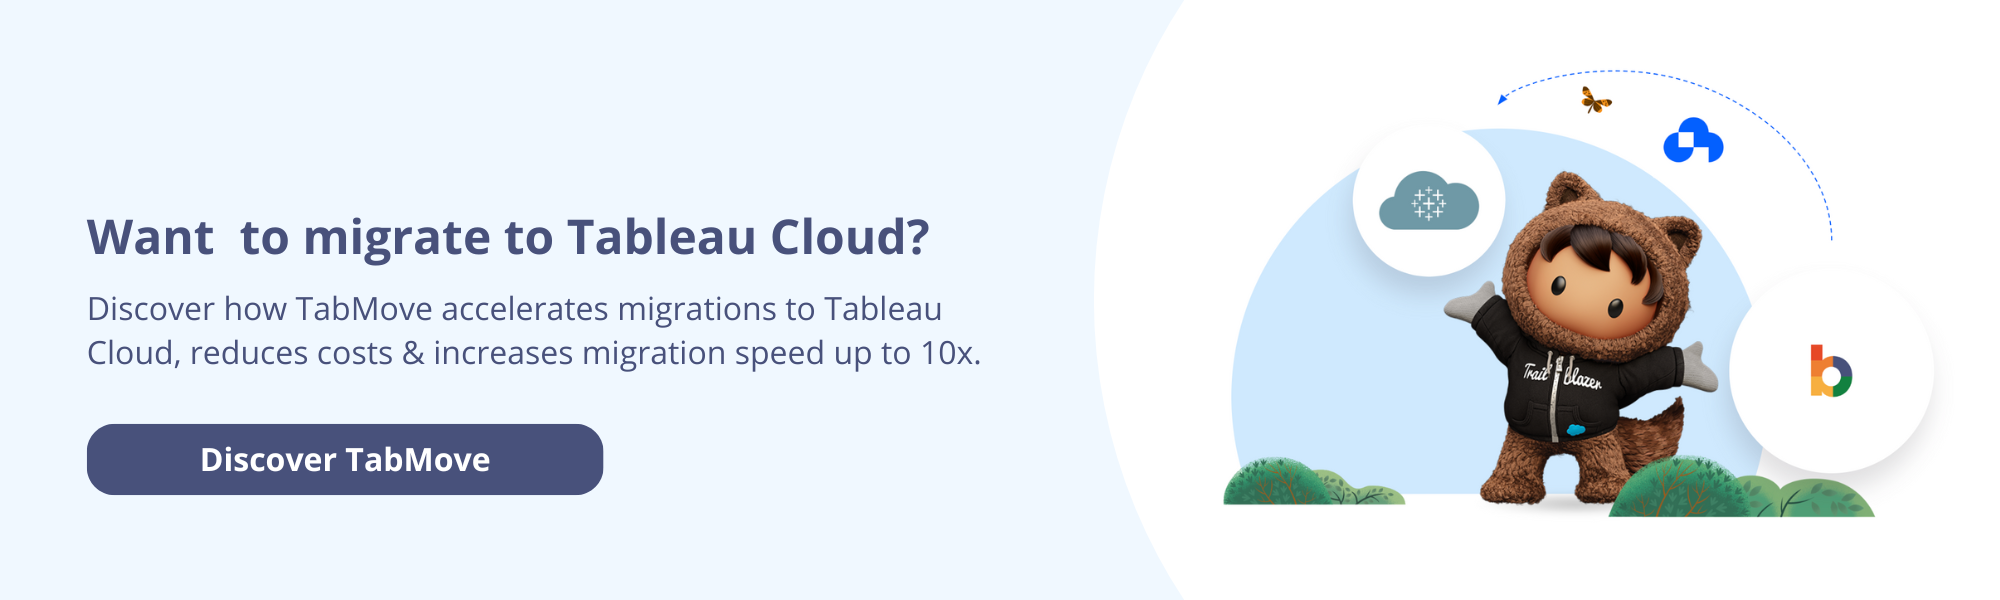 Tabmove cta Tableau cloud migration tool